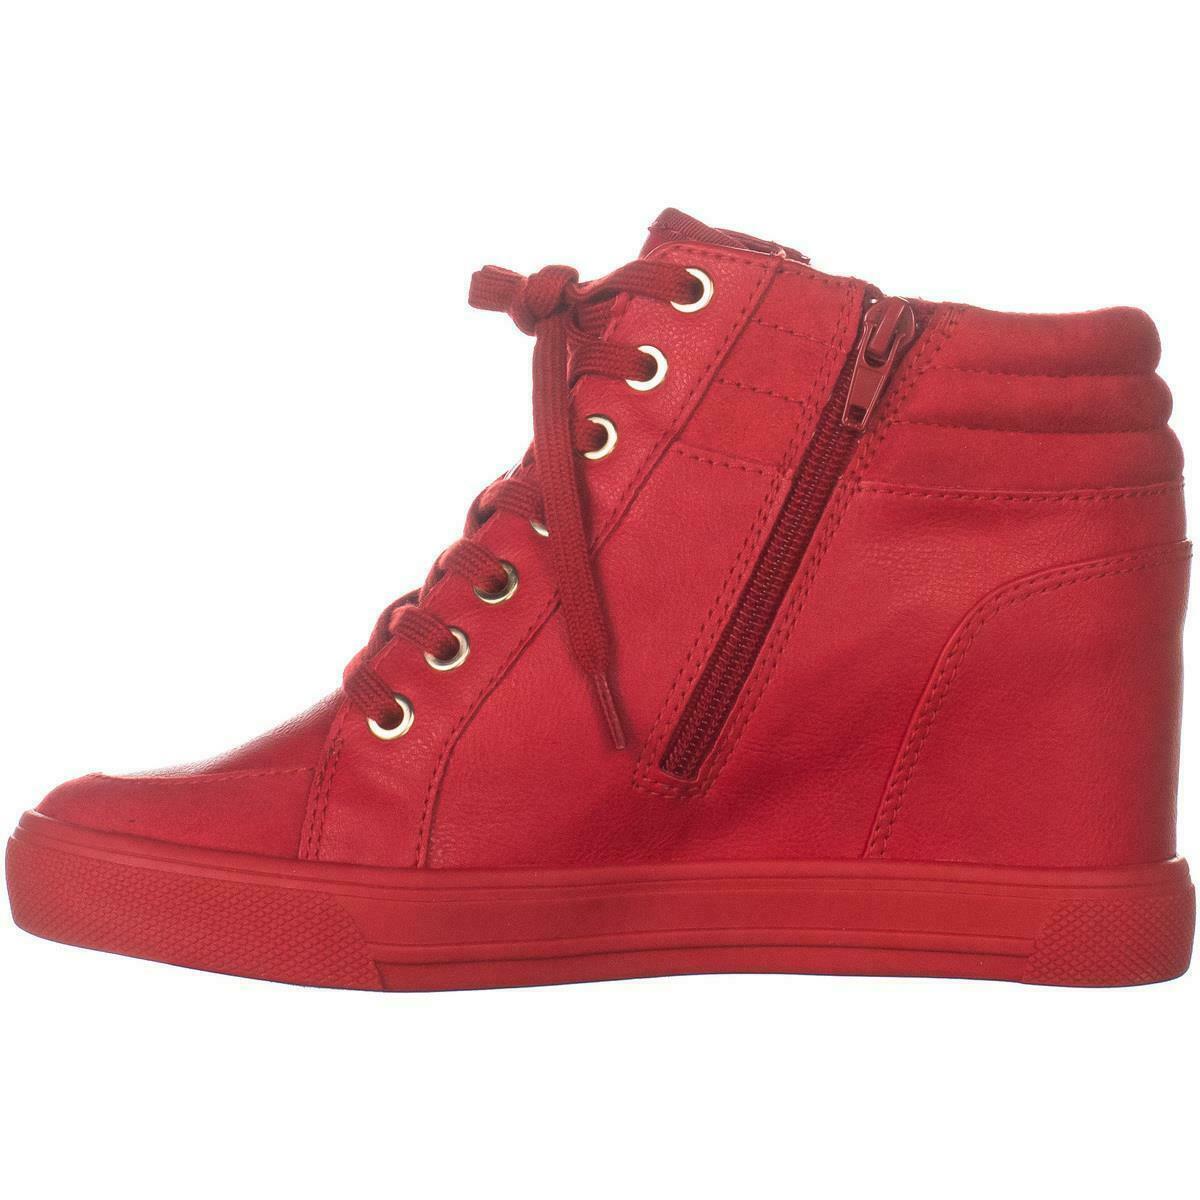 Aldo Kaia Hidden Wedge Fashion Sneakers, Red, 7 US / 37.5 EU - Athletic